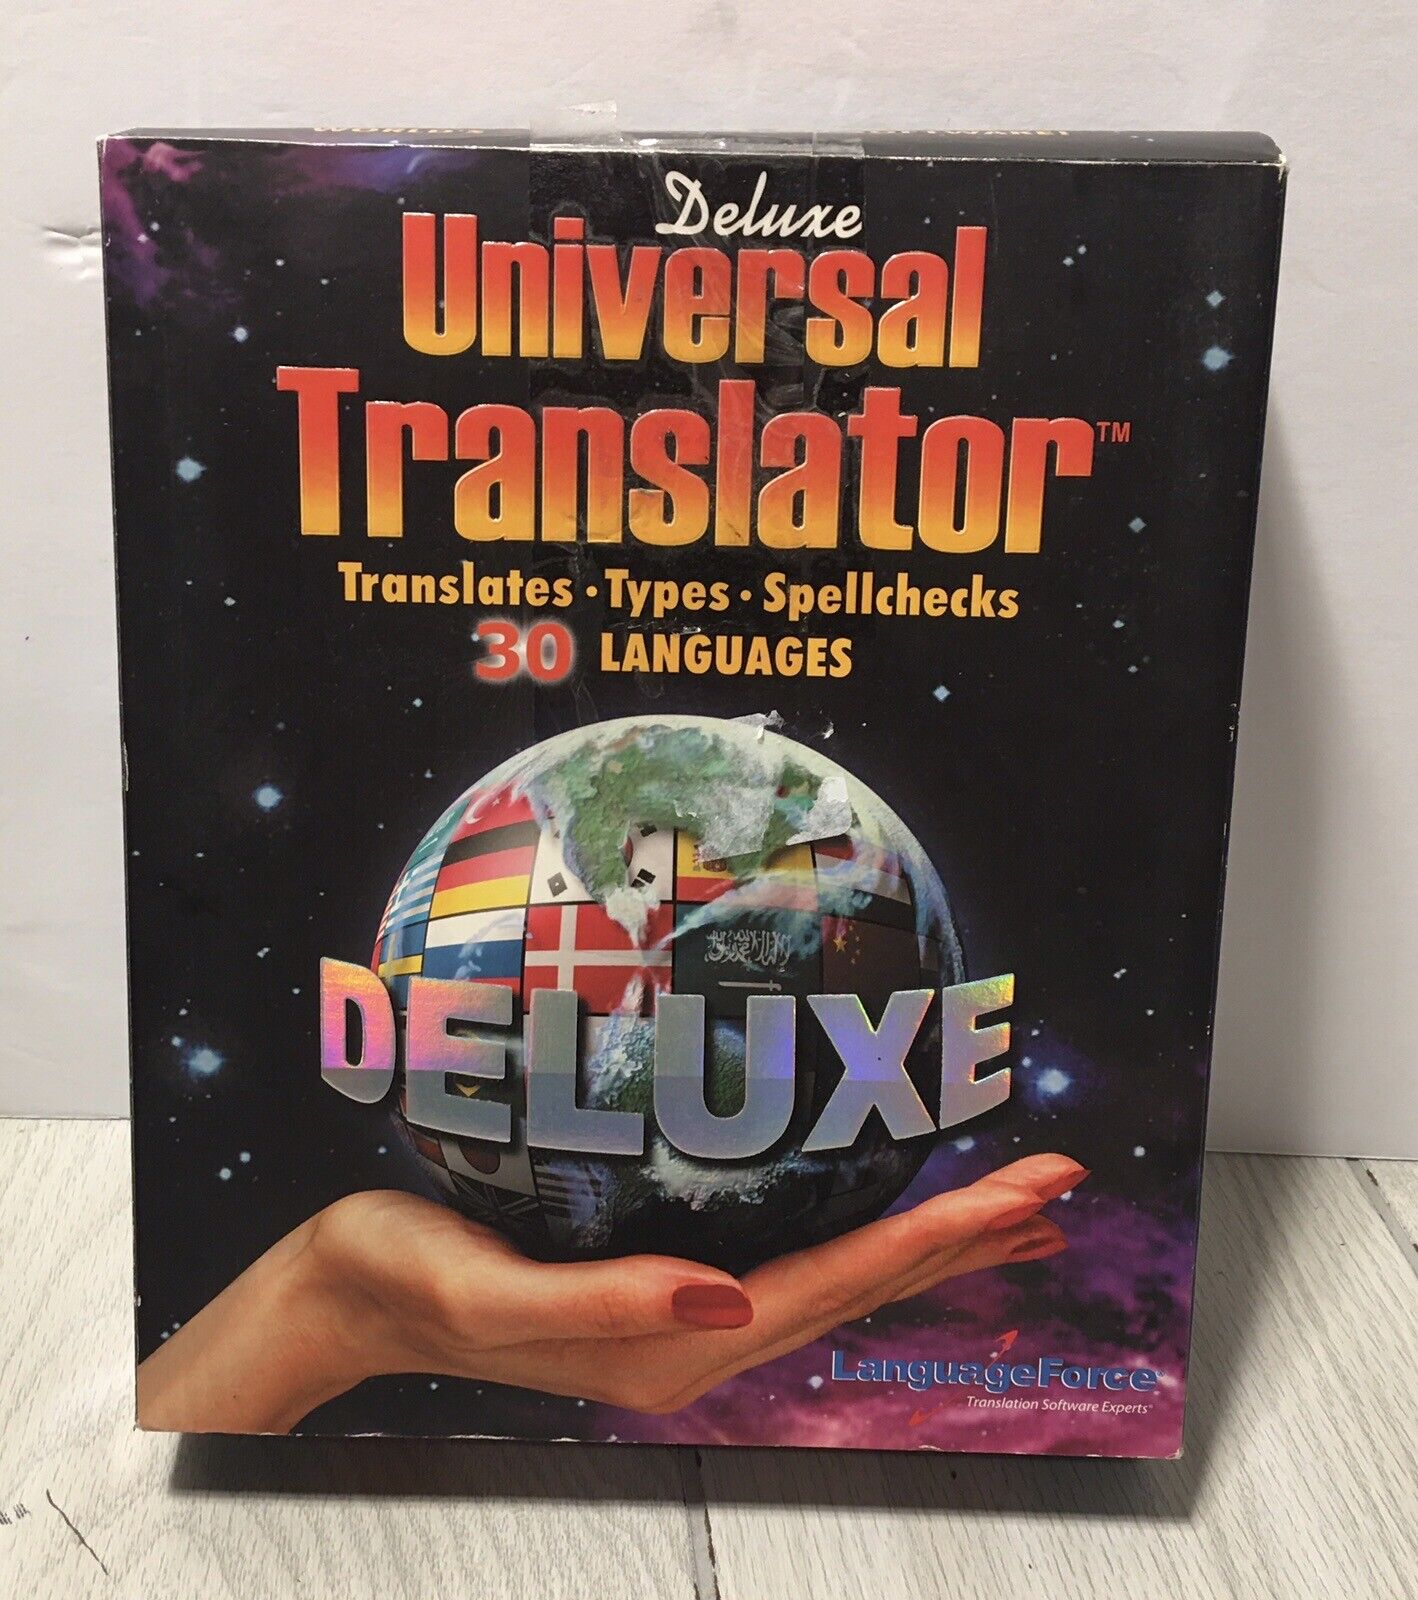 Deluxe Universal Translator (Windows 95/98 CD-ROM, 642573432309) 30 Languages